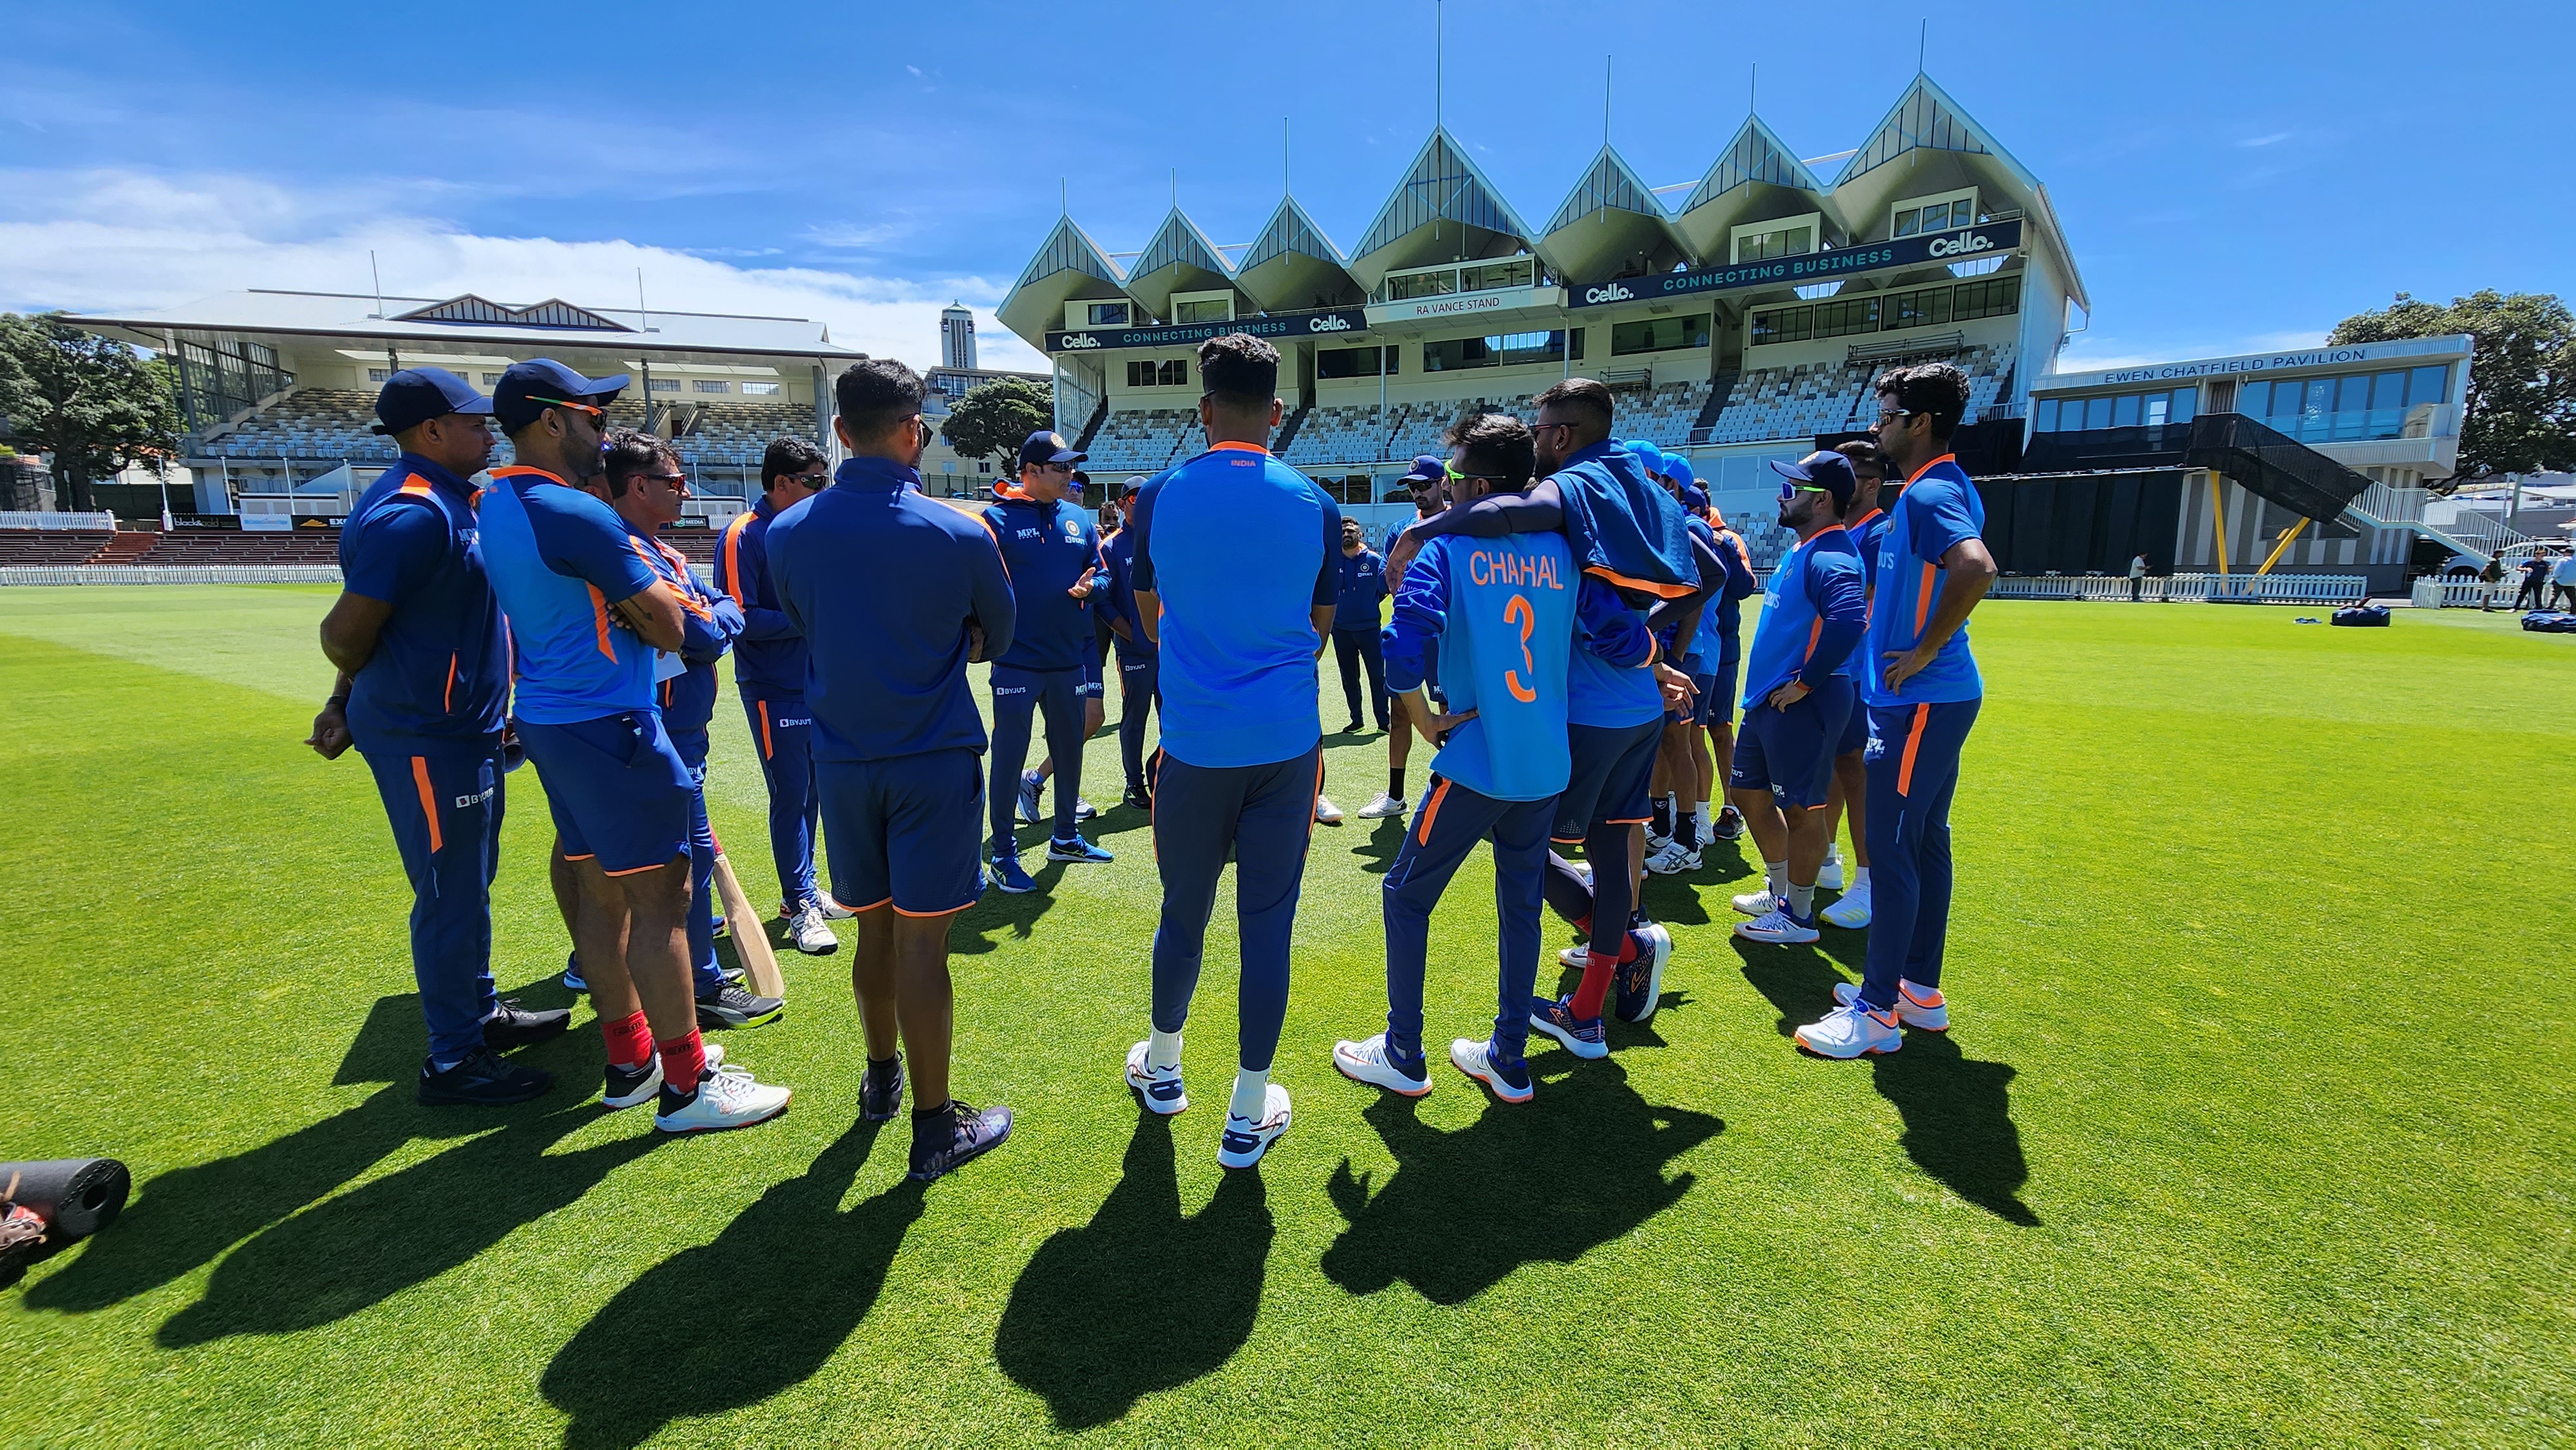 VVS Laxman talking to Indian team members in Wellington | BCCI